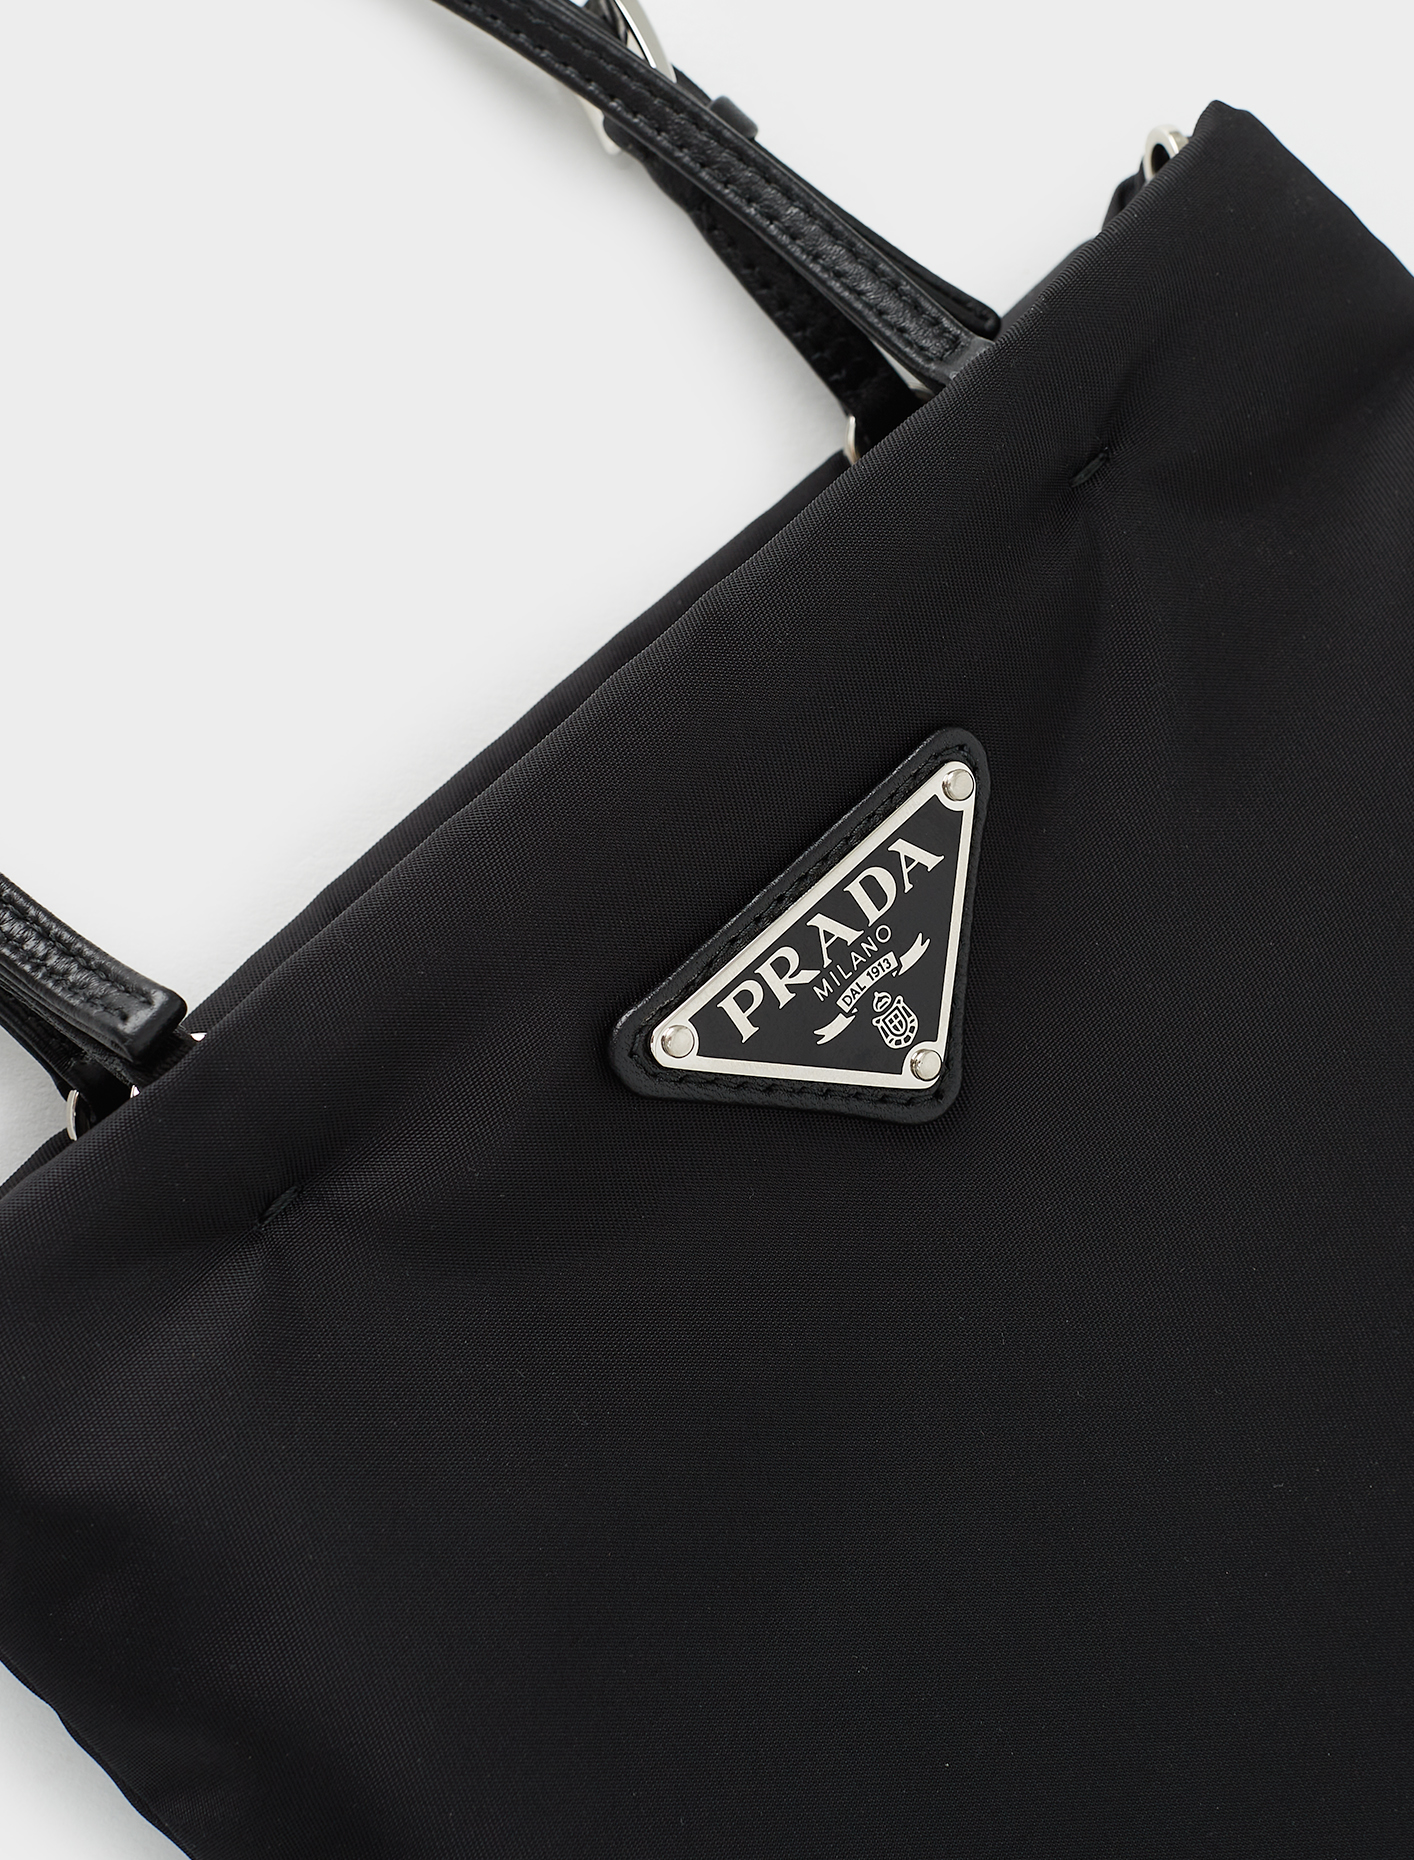 Prada Nylon Tote Bag with Leather Handles in Black | Voo Store Berlin ...